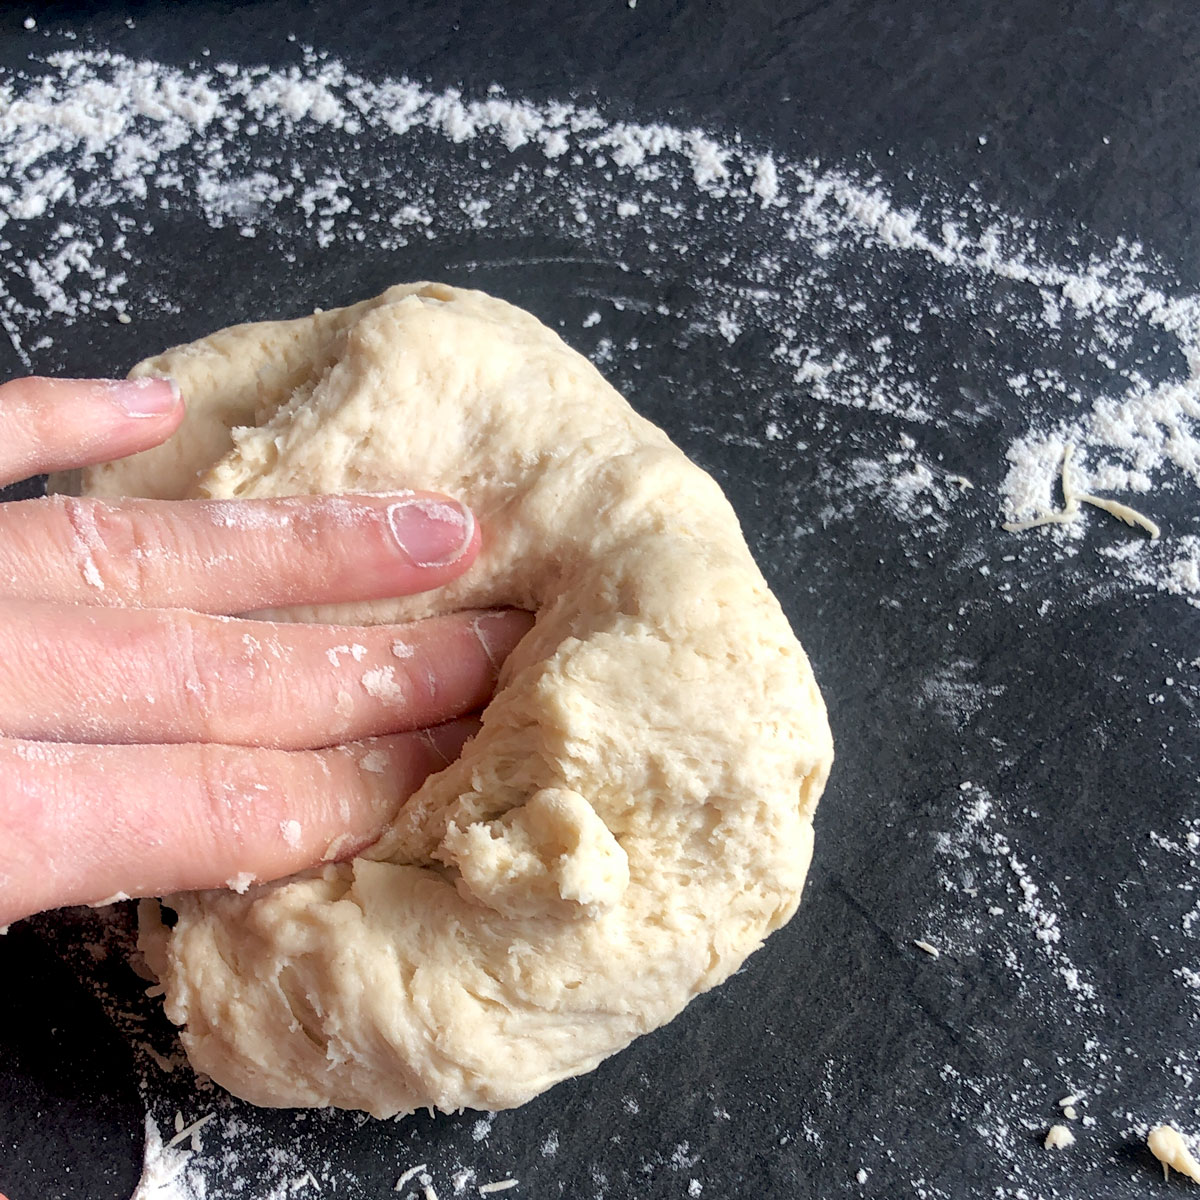 A hand gently folding scone doug.